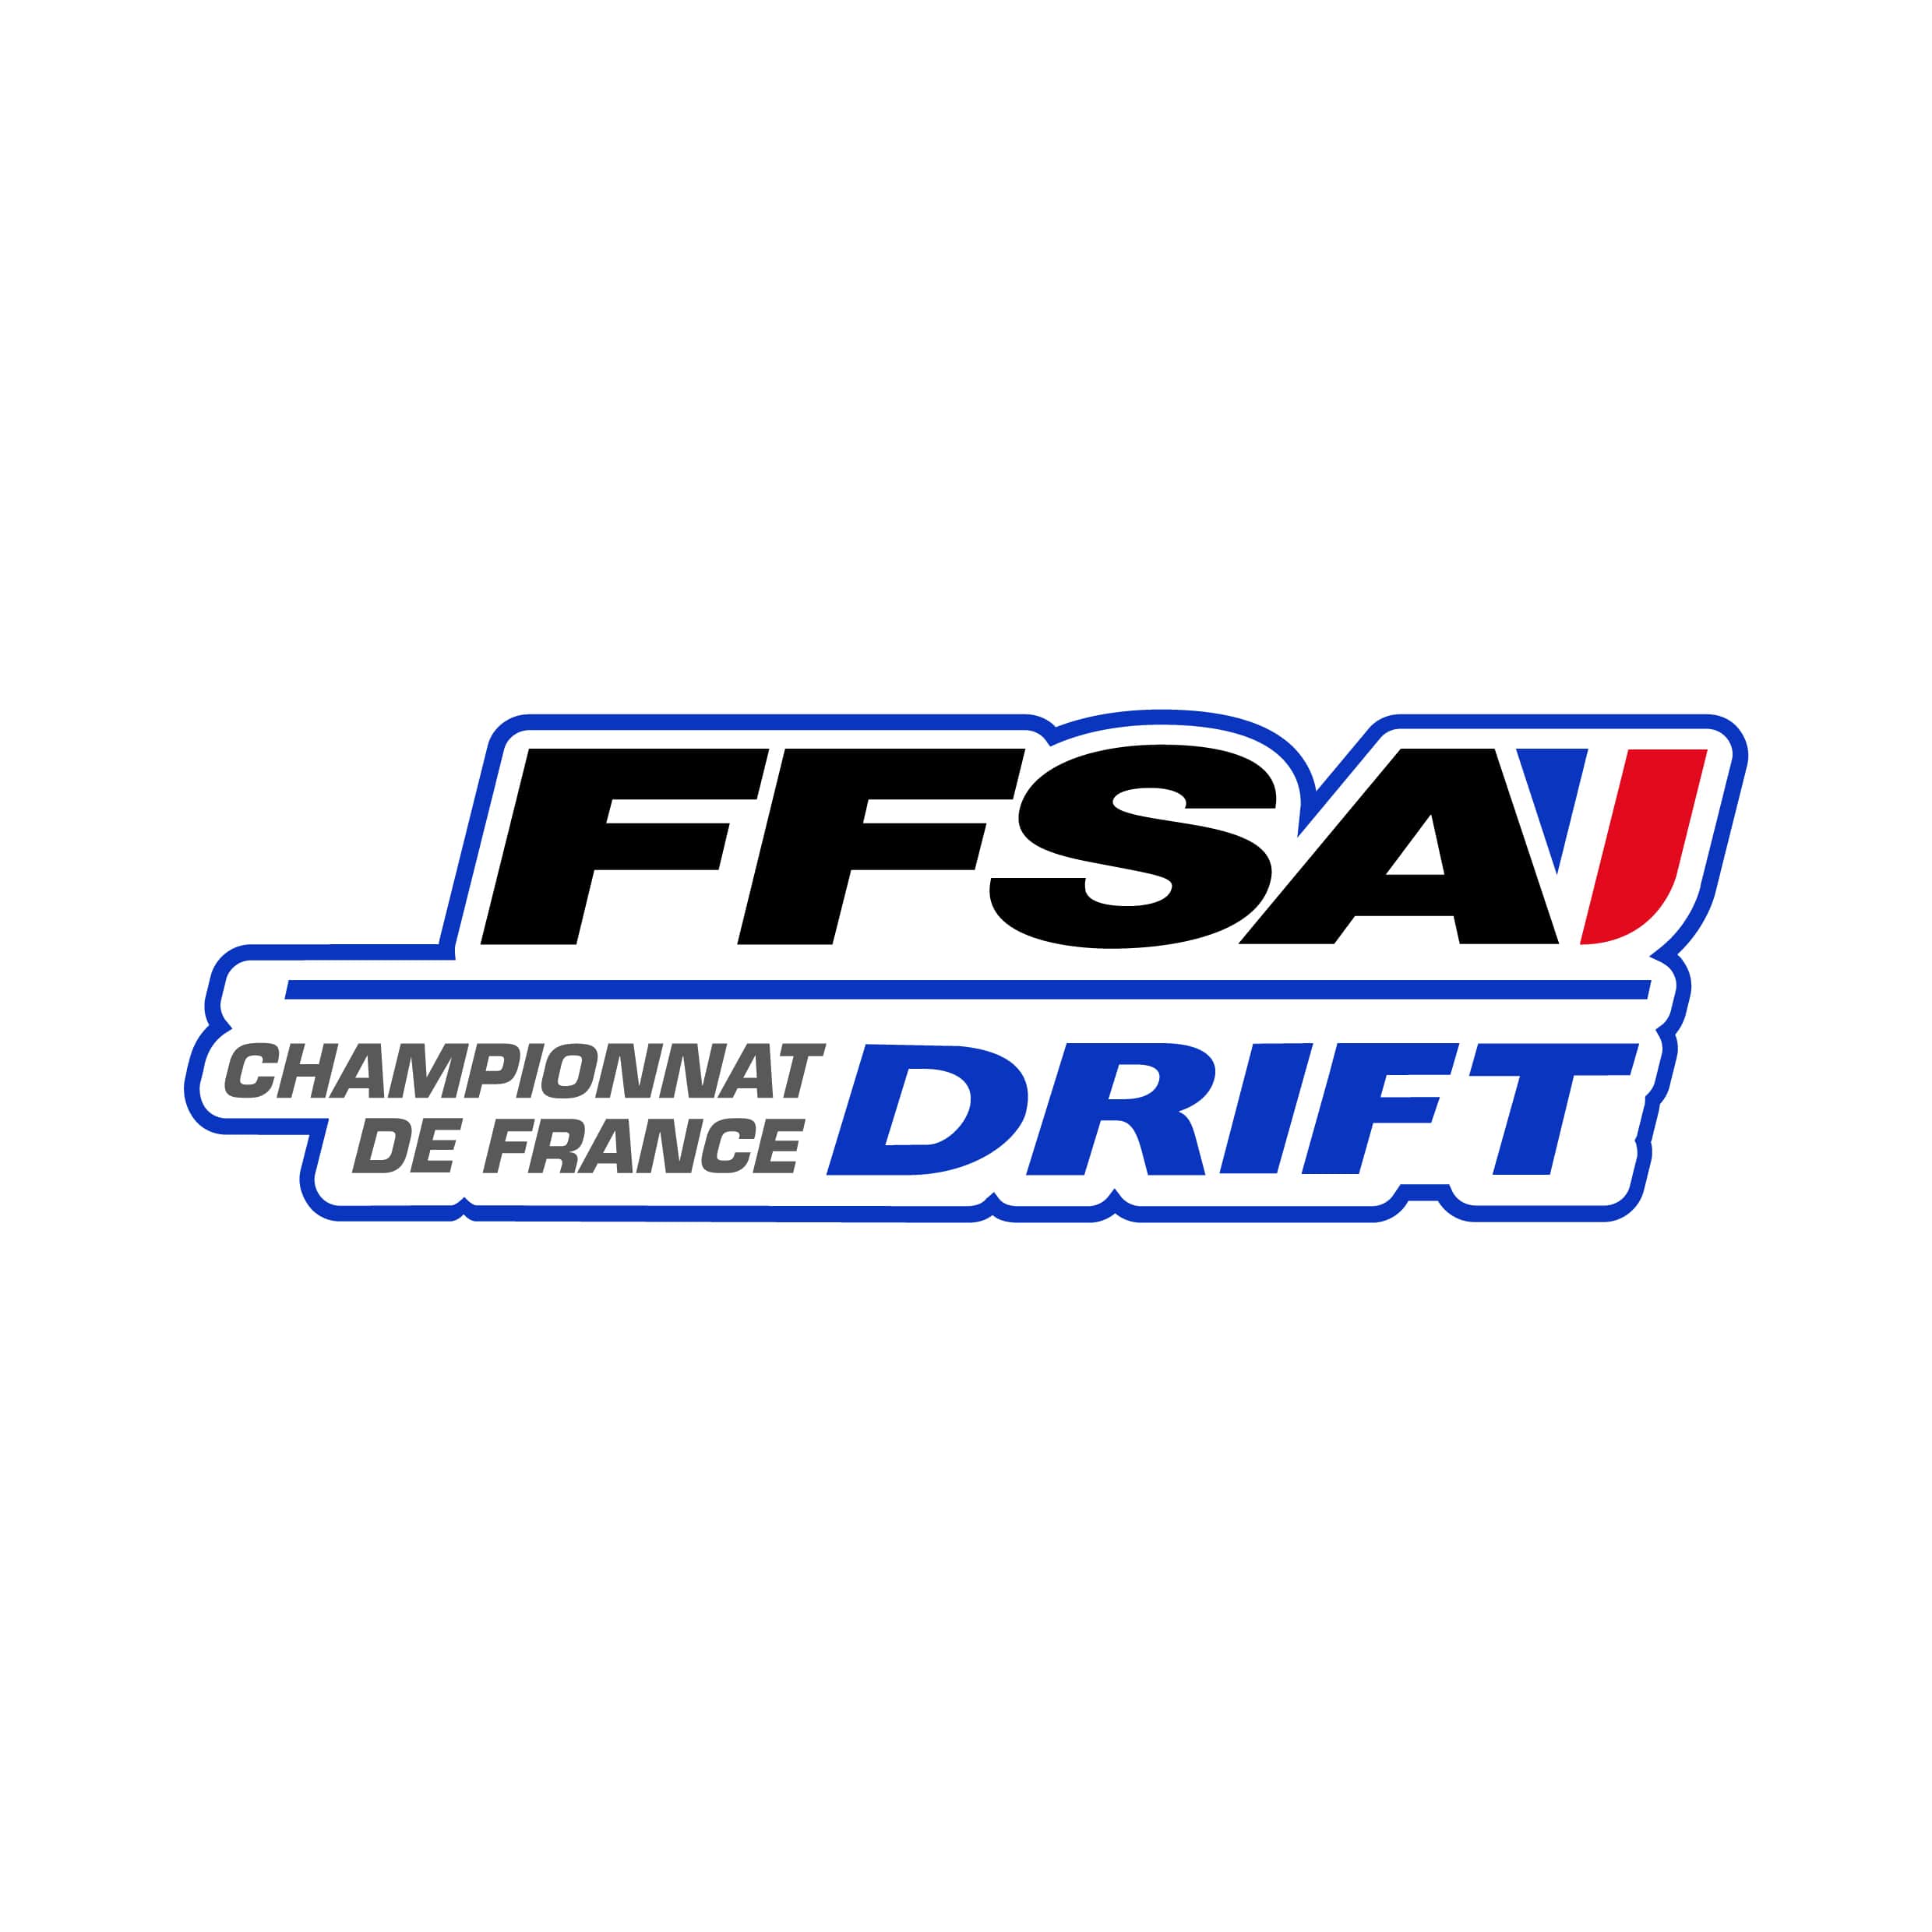 stickers-ffsa-championnat-france-drift-ref15-sport-automobile-autocollant-voiture-sticker-auto-autocollants-decals-racing-min